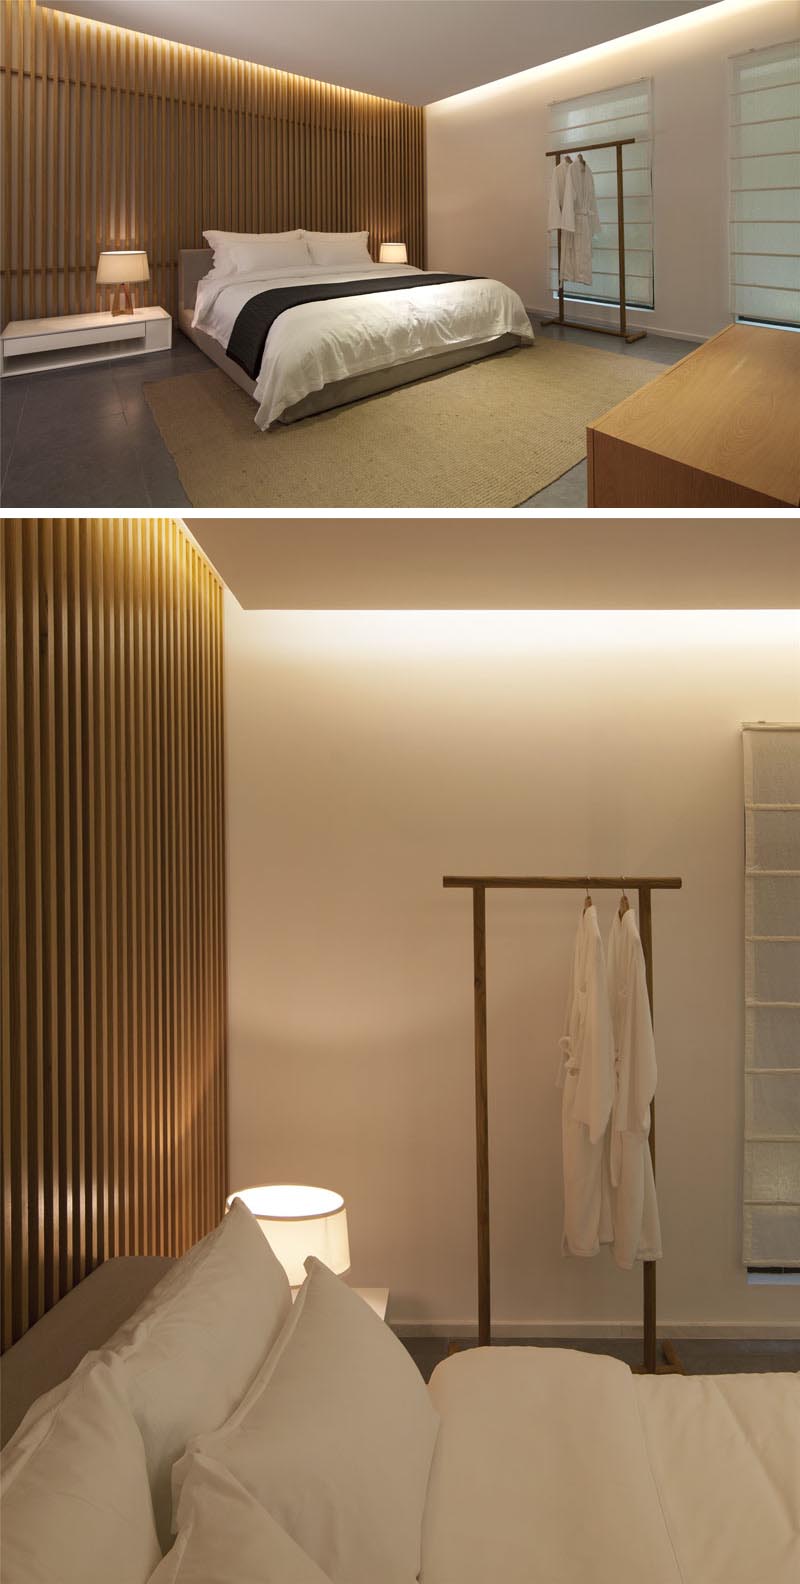 Bedroom Design Ideas - A modern resort style bedroom with hidden LED lighting.